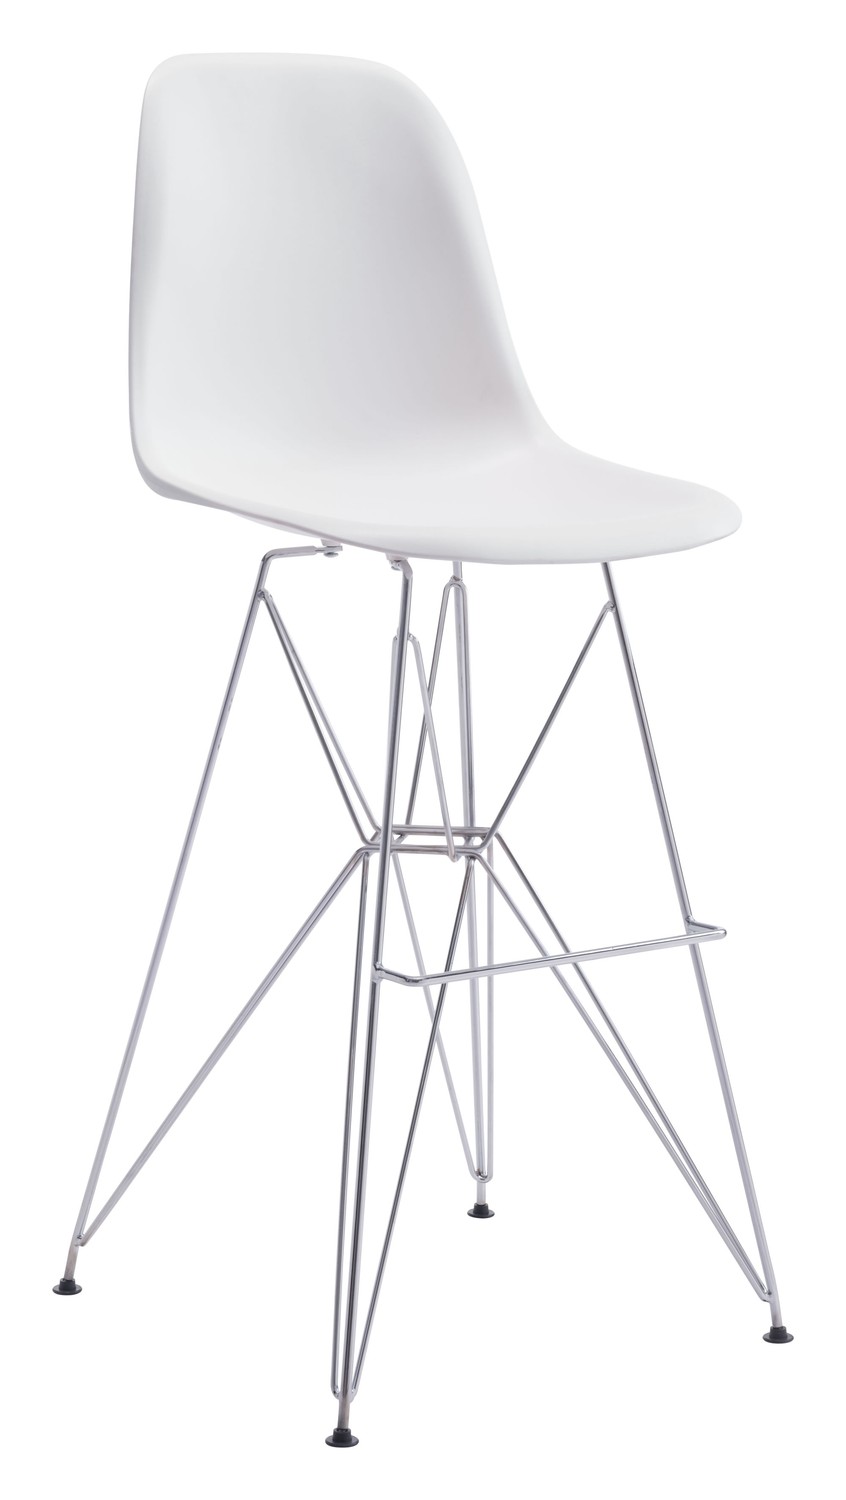 19" x 20.3" x 44" White, Polypropylene, Chromed Steel, Bar Chair